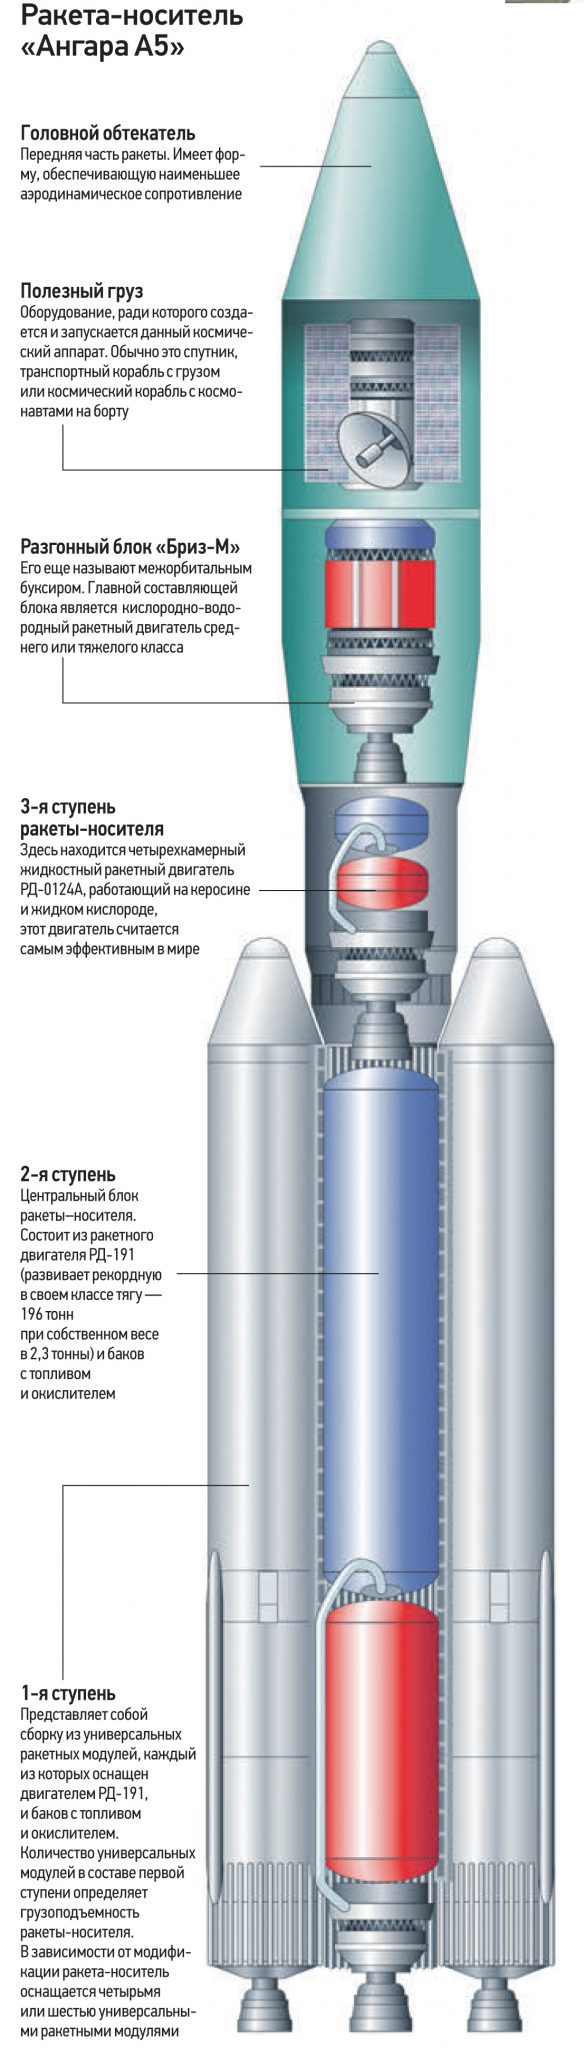 Ангара 5 ракета носитель характеристики. Ракета Ангара а5 чертеж. Ракеты Союз Протон Ангара. Ангара-а5 характеристики. Ангара а7 ракета носитель характеристики.